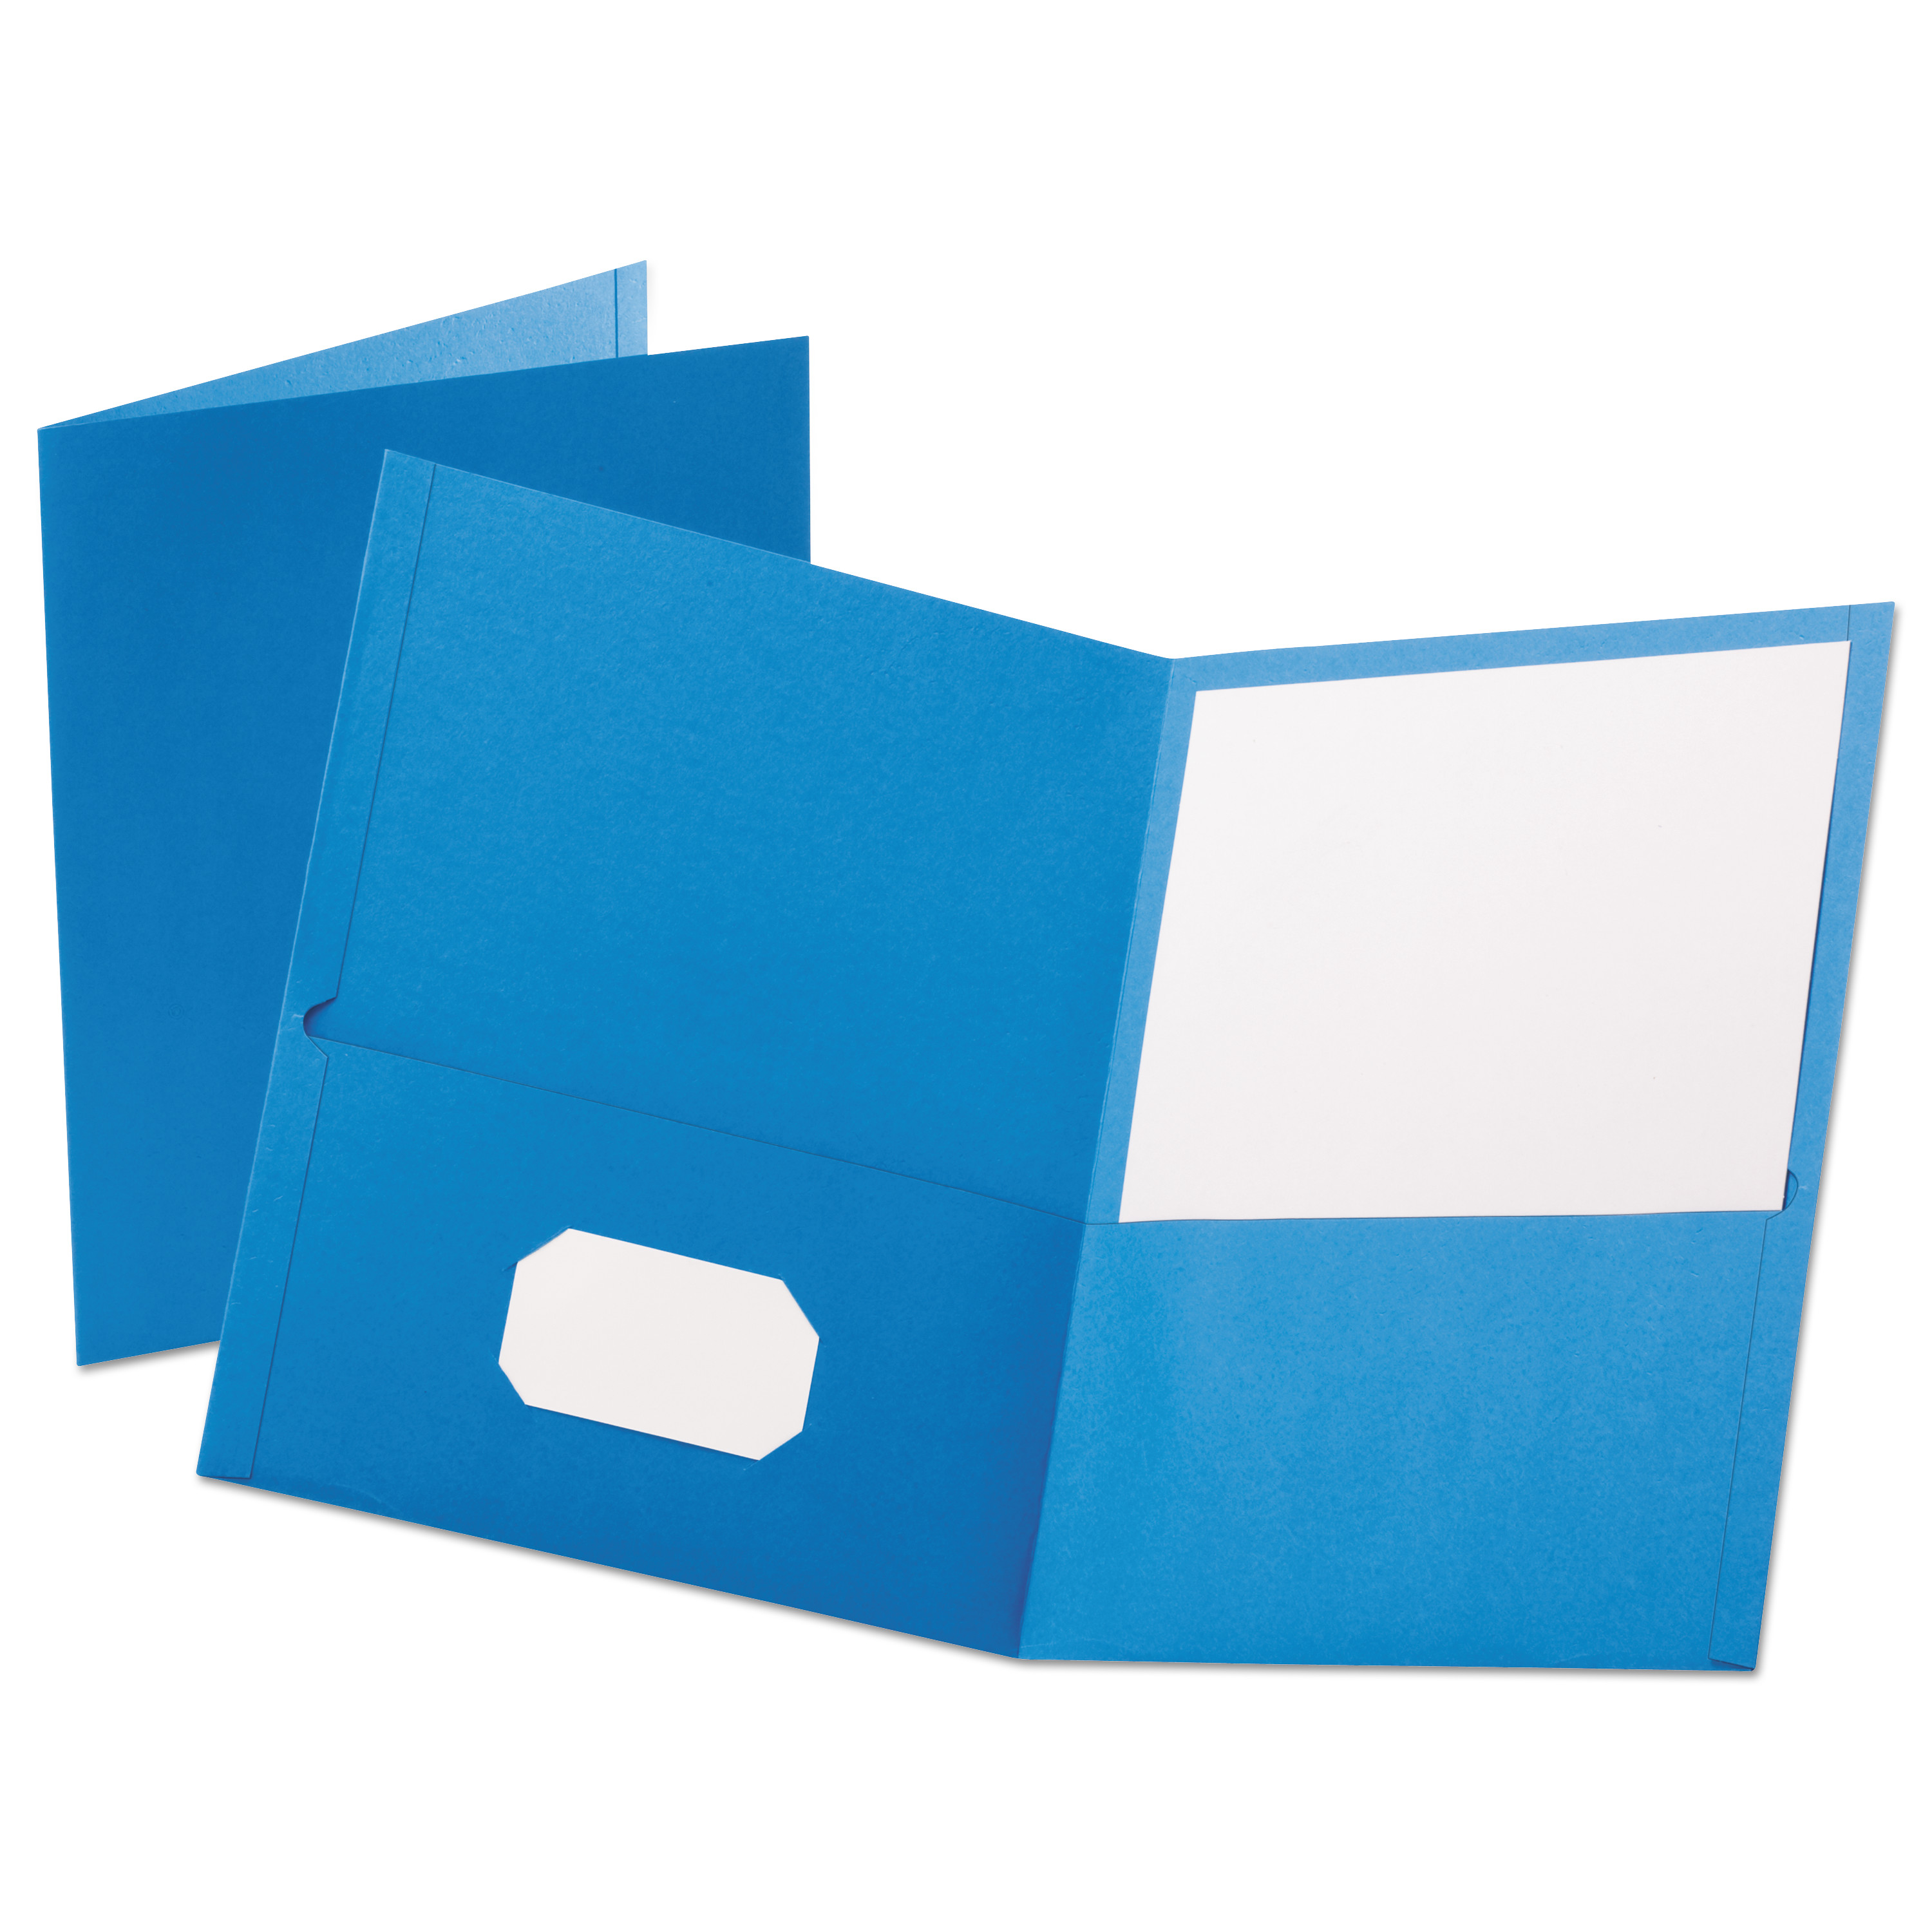  Oxford 57571 Leatherette Two Pocket Portfolio, 8 1/2 x 11, Light Blue, 10/PK (OXF57571) 